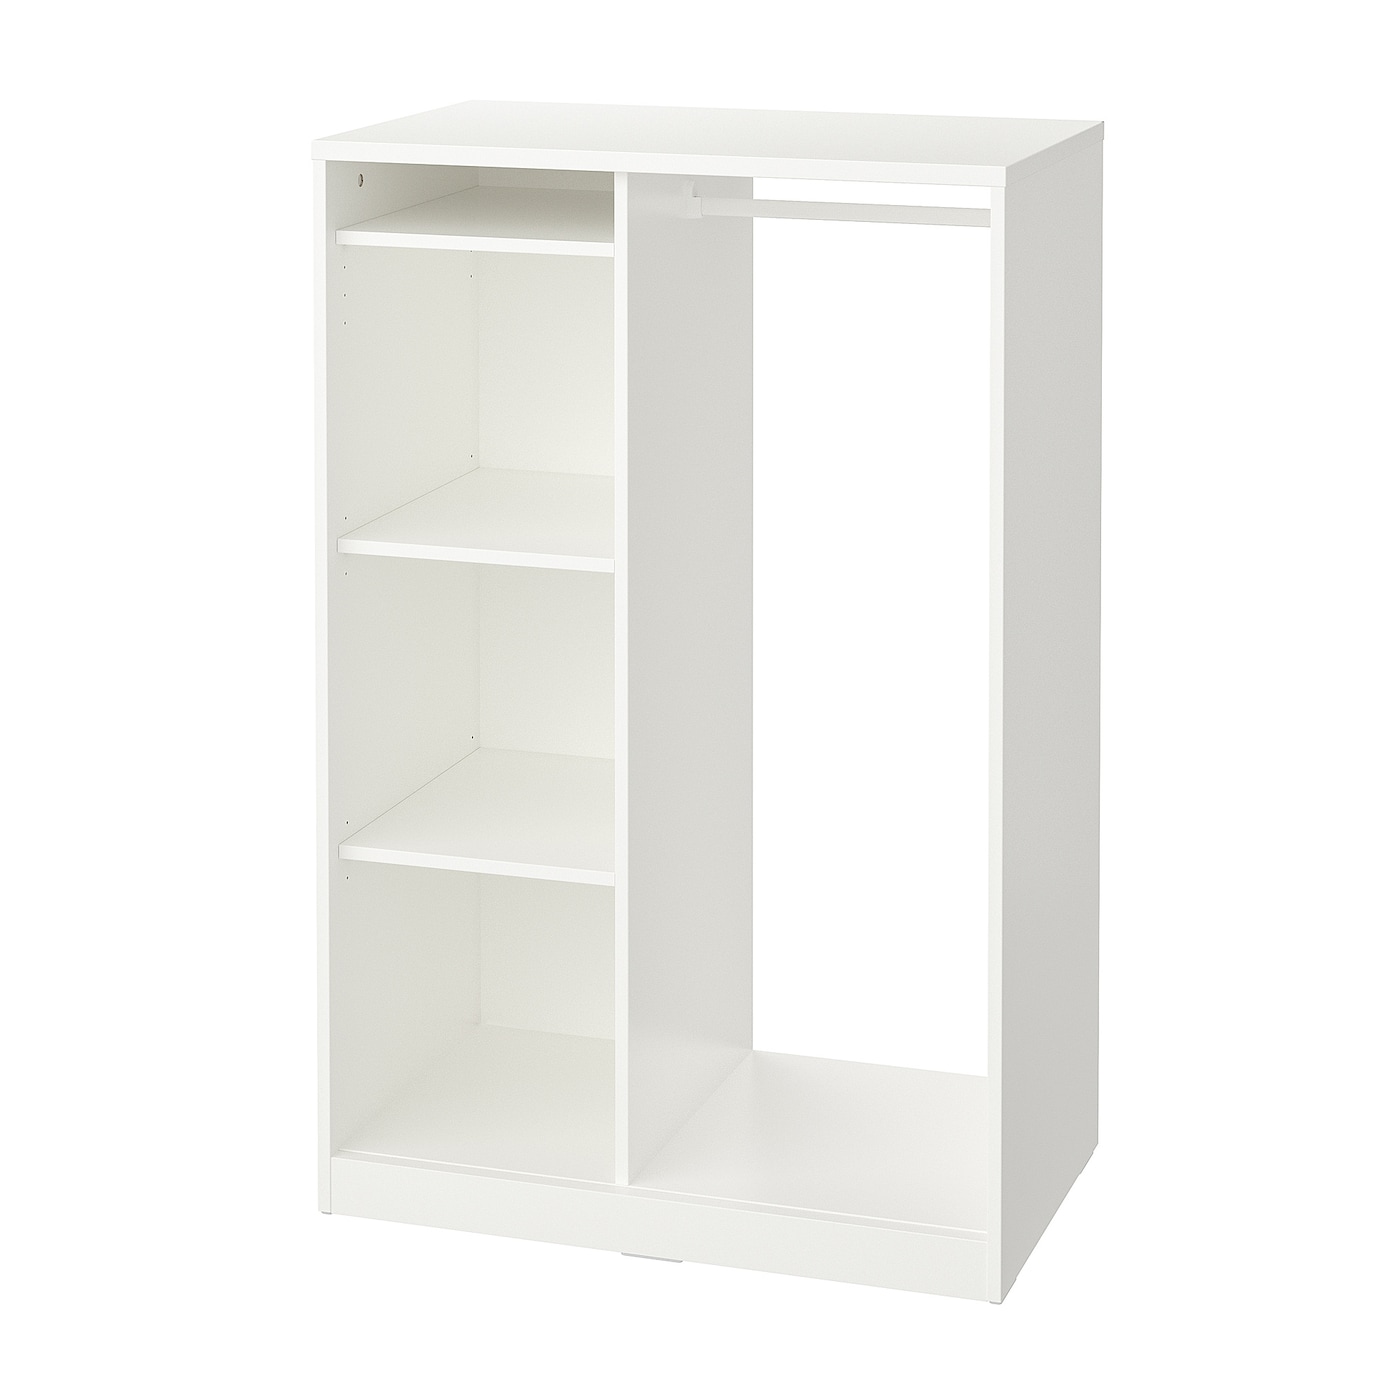 SYVDE open wardrobe white - IKEA